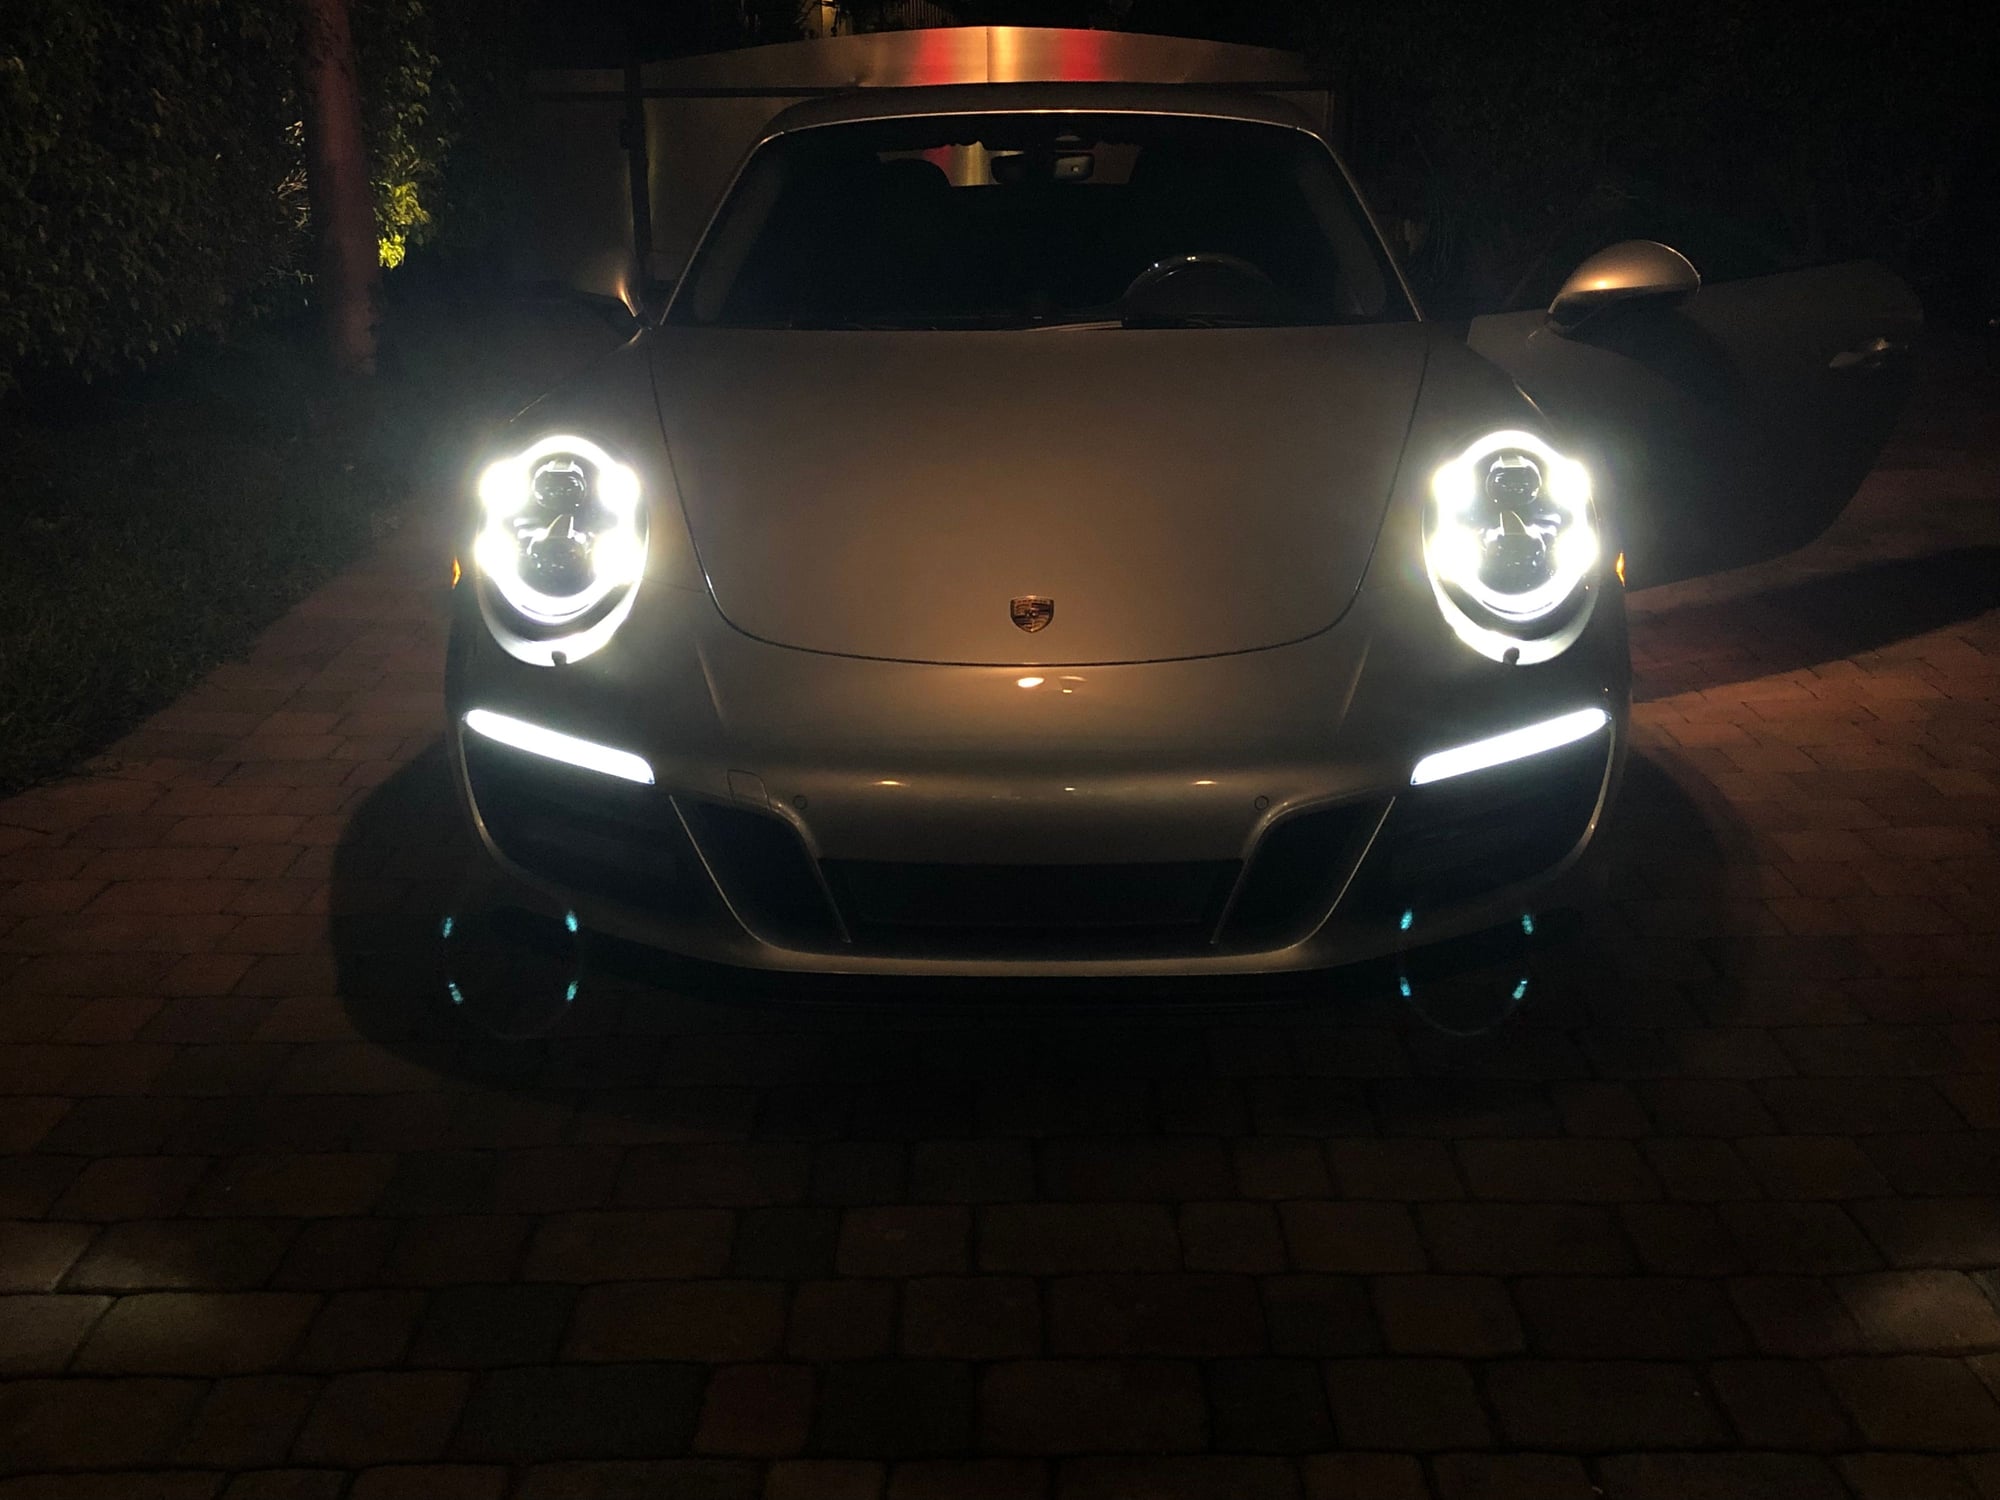 2017 Porsche 911 - 2017 Porsche 911 Carrera GTS Coupe RWD - Used - VIN WP0AB2A93HS12471 - 13,550 Miles - 3 cyl - 2WD - Automatic - Coupe - Silver - Miami Beach, FL 33141, United States